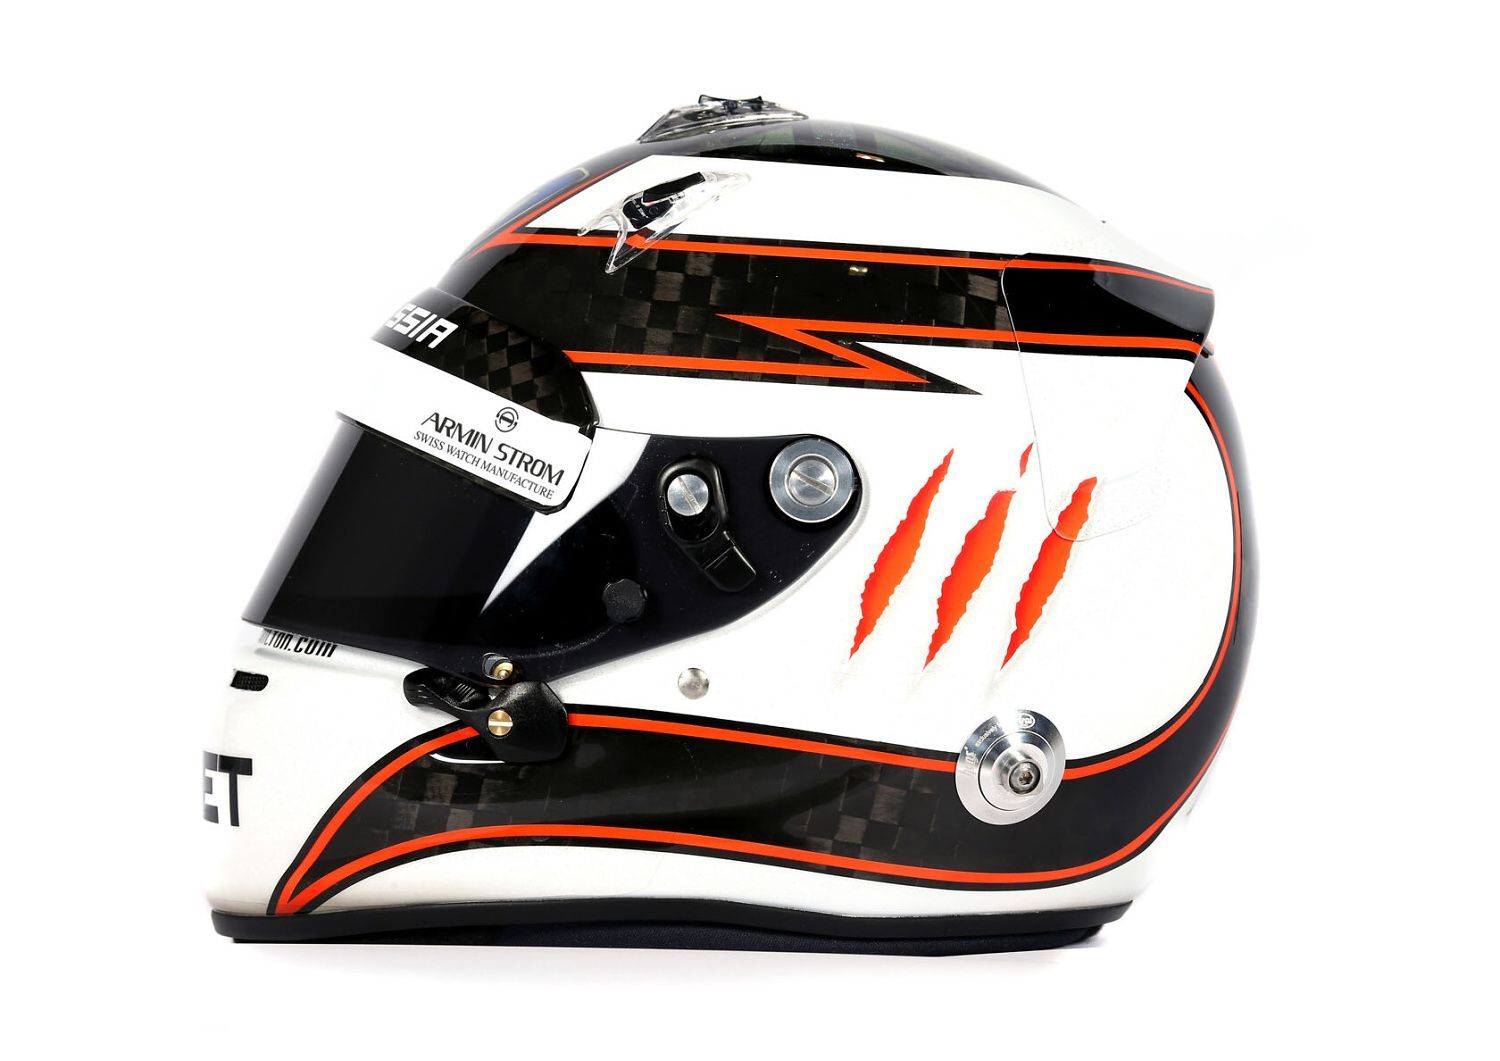 Formule 1, helma: Max Chilton